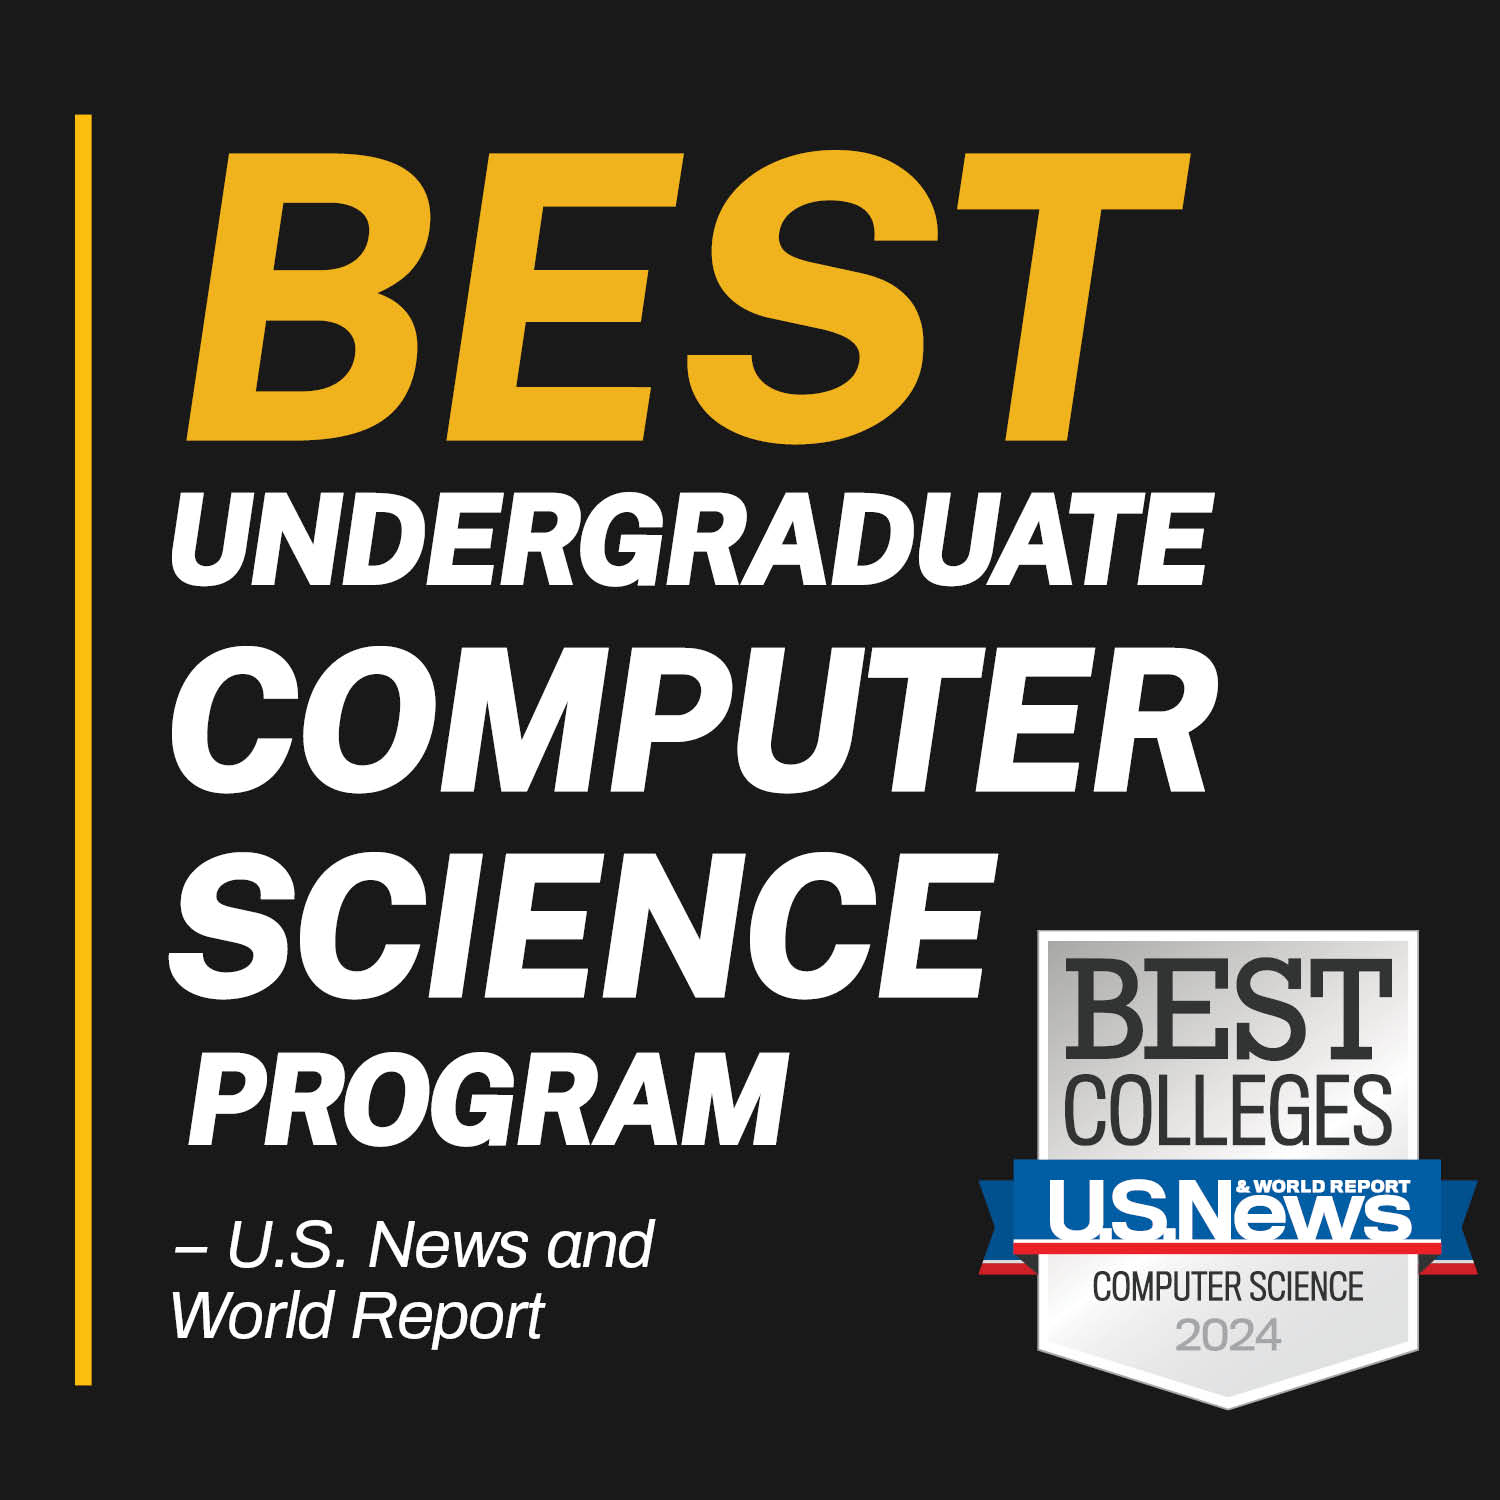 Best Undergraduate Computer Science Program - U.S. News and World Report